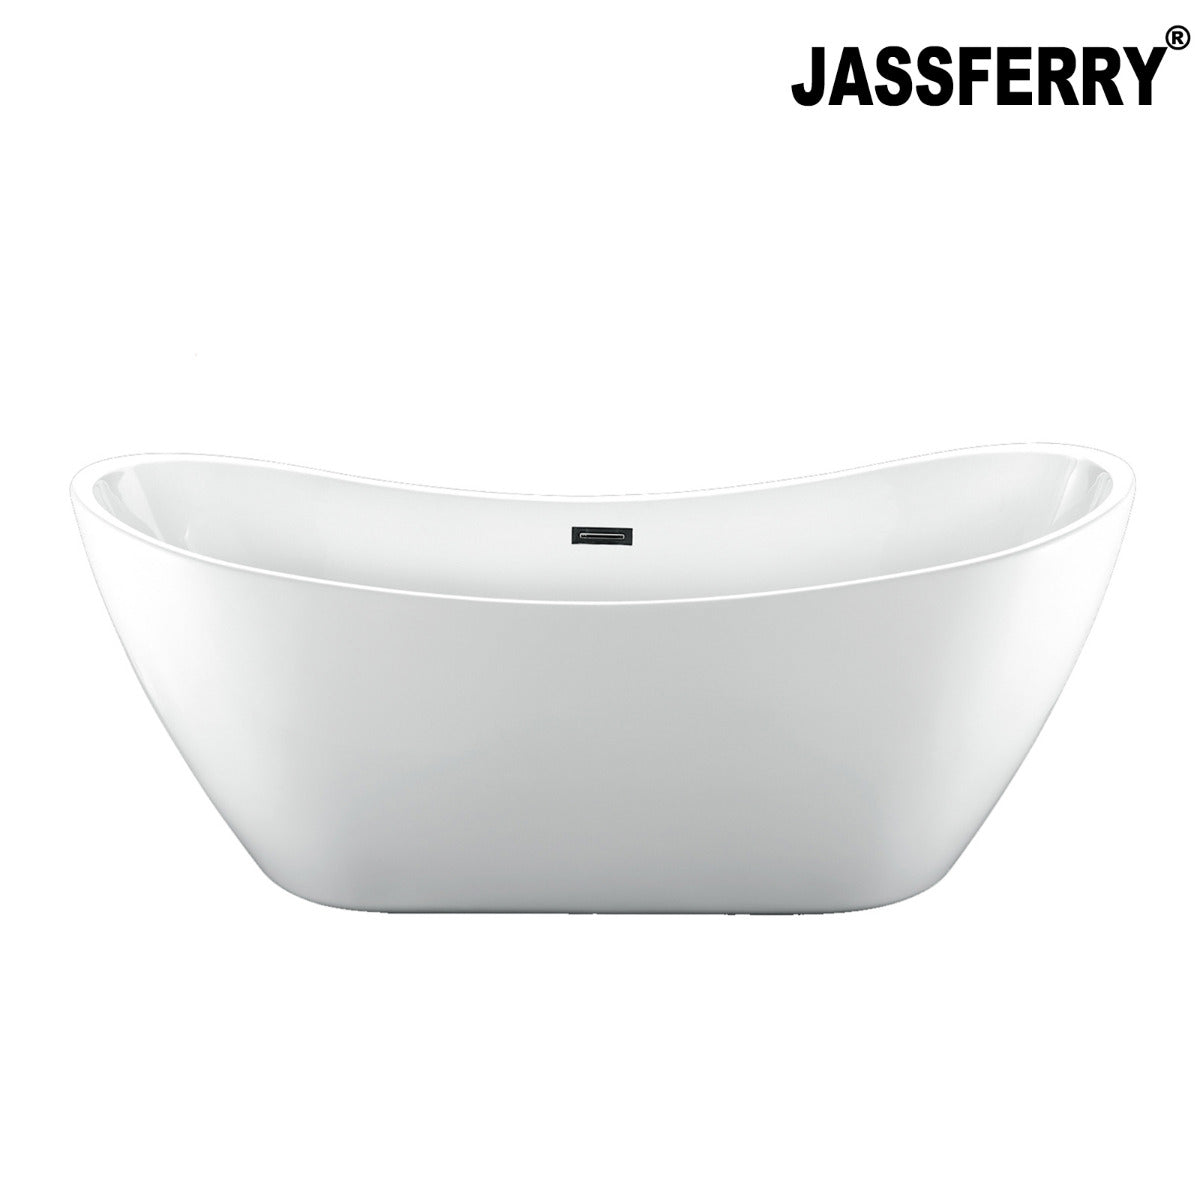 JassferryJASSFERRY Modern Design Freestanding Bathtub Luxury Soaking Baths White AcrylicBathtubs